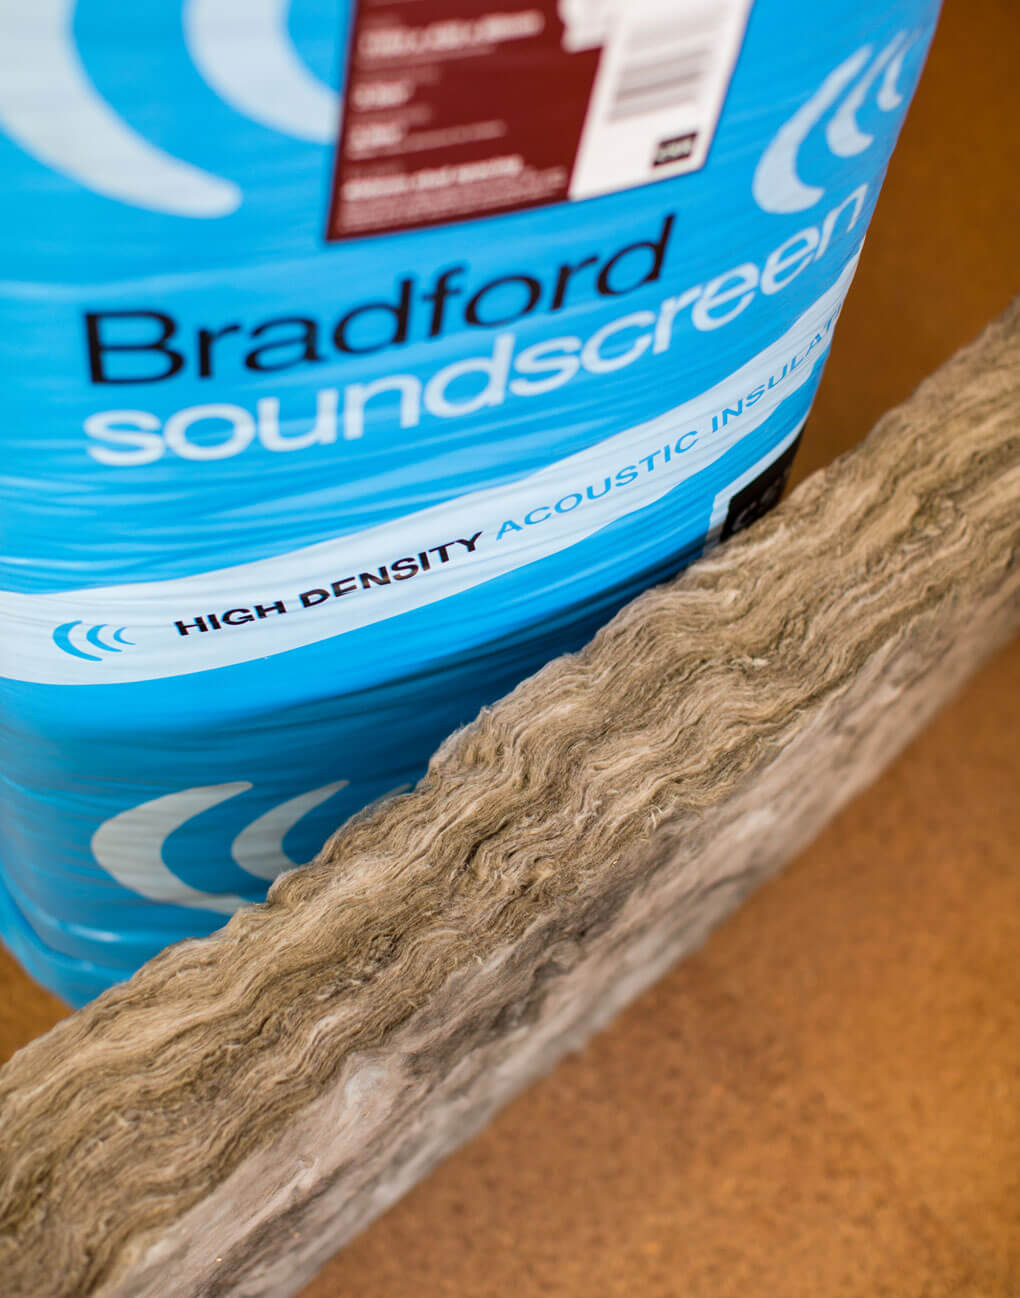 Buy Bradford Soundscreen Acoustic Insulation Online